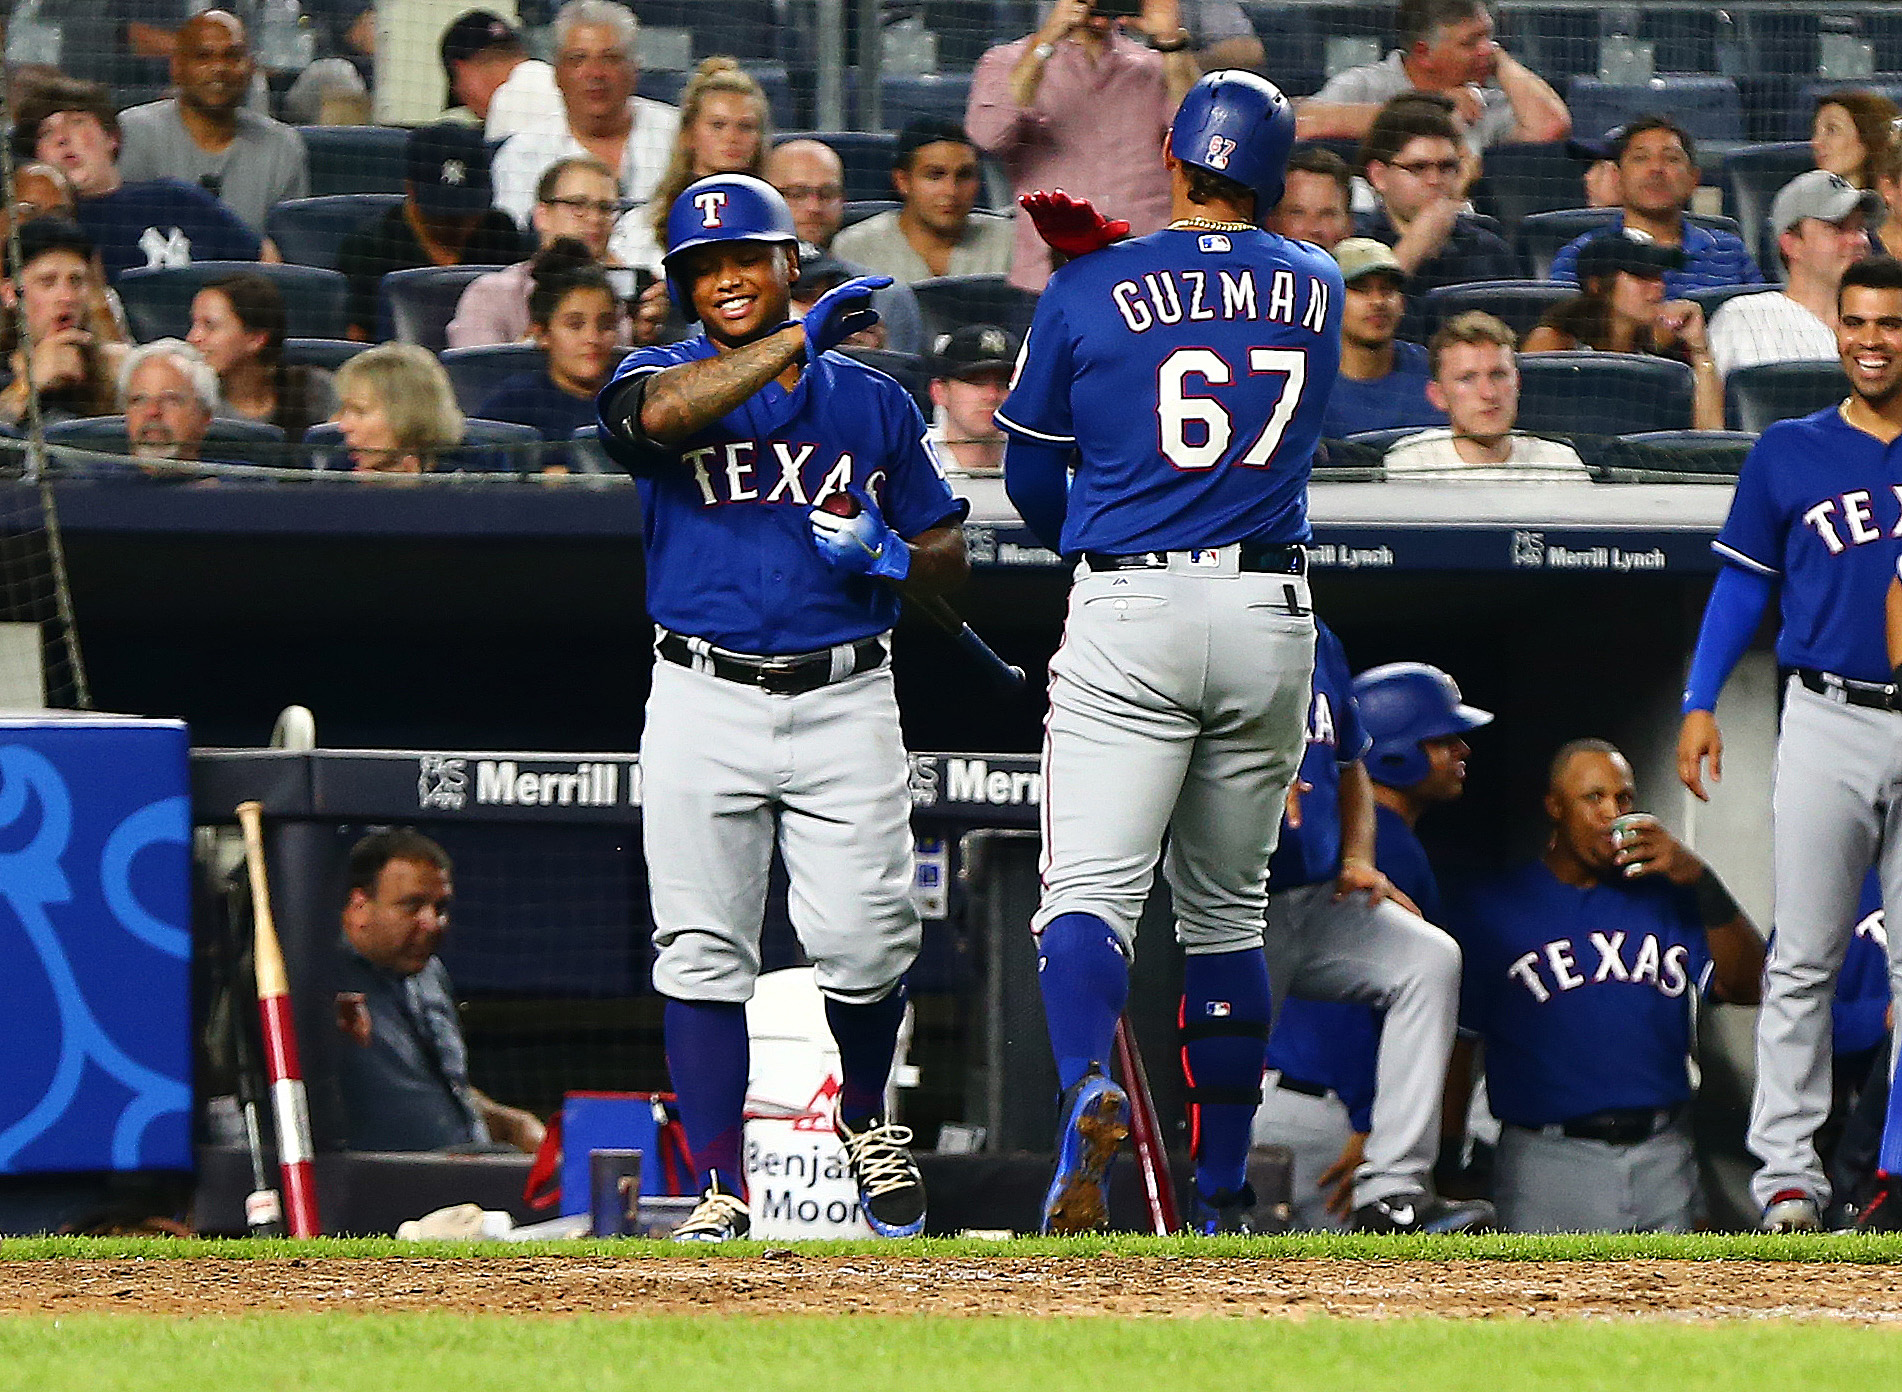 HIGHLIGHTS: Guzman sets history as his 3 homers power Rangers past Yankees